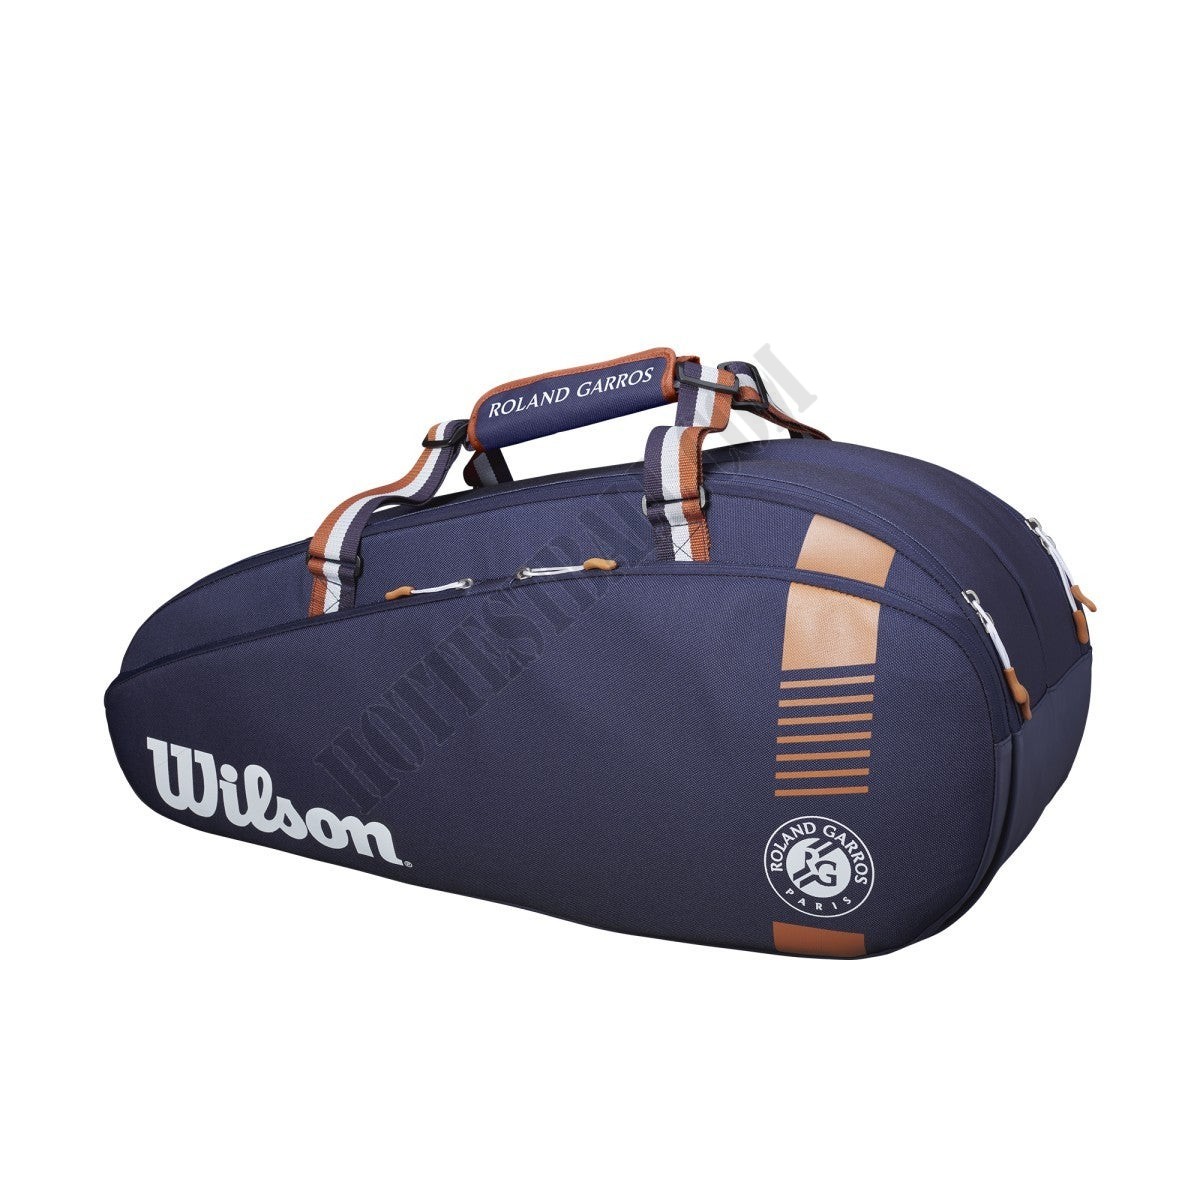 Roland Garros Team 6 Pack Tennis Bag - Wilson Discount Store - Roland Garros Team 6 Pack Tennis Bag - Wilson Discount Store